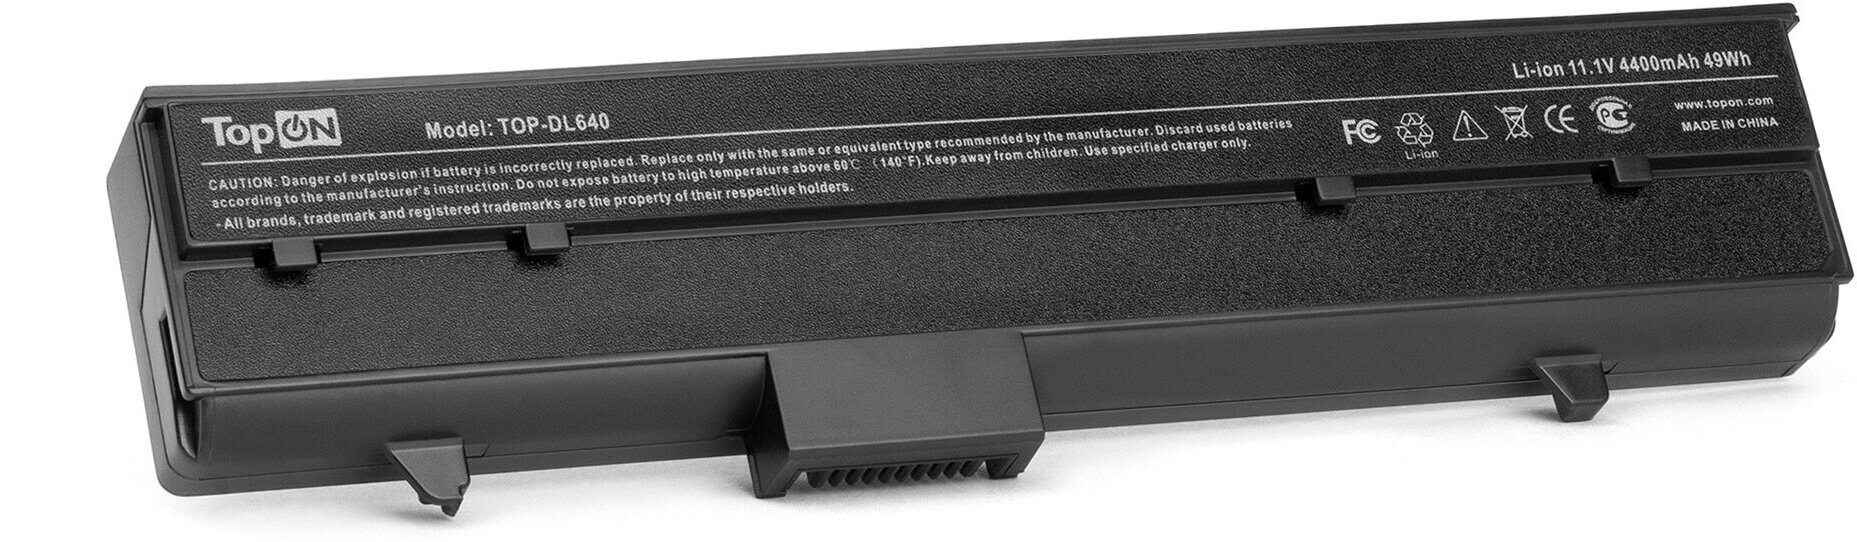 Аккумулятор для ноутбука Dell Inspiron 630m, 640m, E1405, XPS M140 Series. 11.1V 4400mAh 49Wh. PN: C9551, DH074.